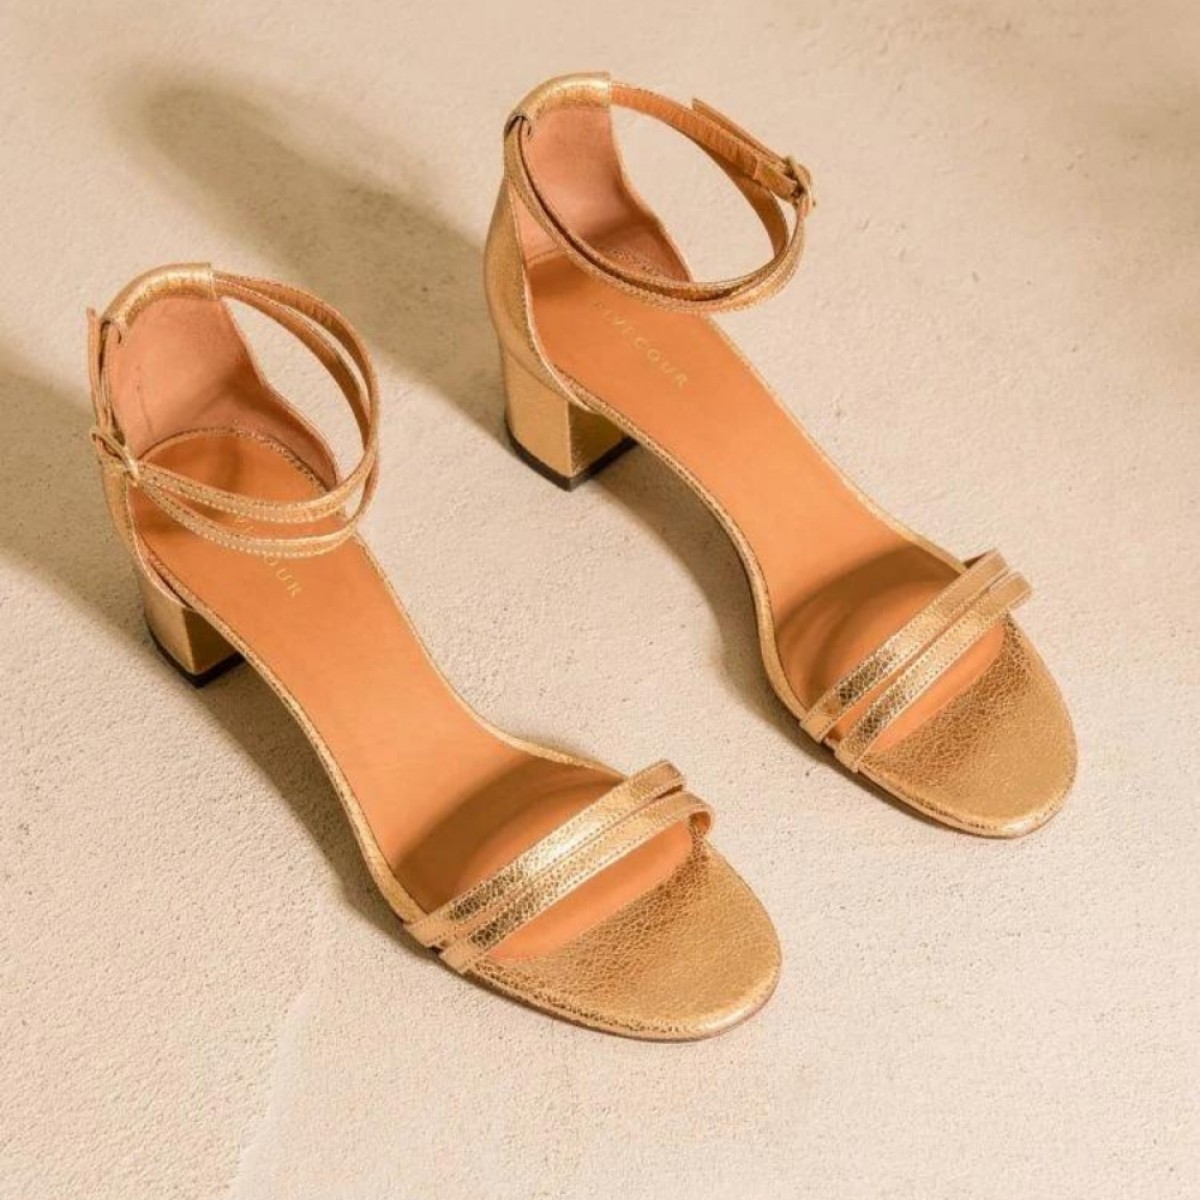 sandals no 466 - gold - front